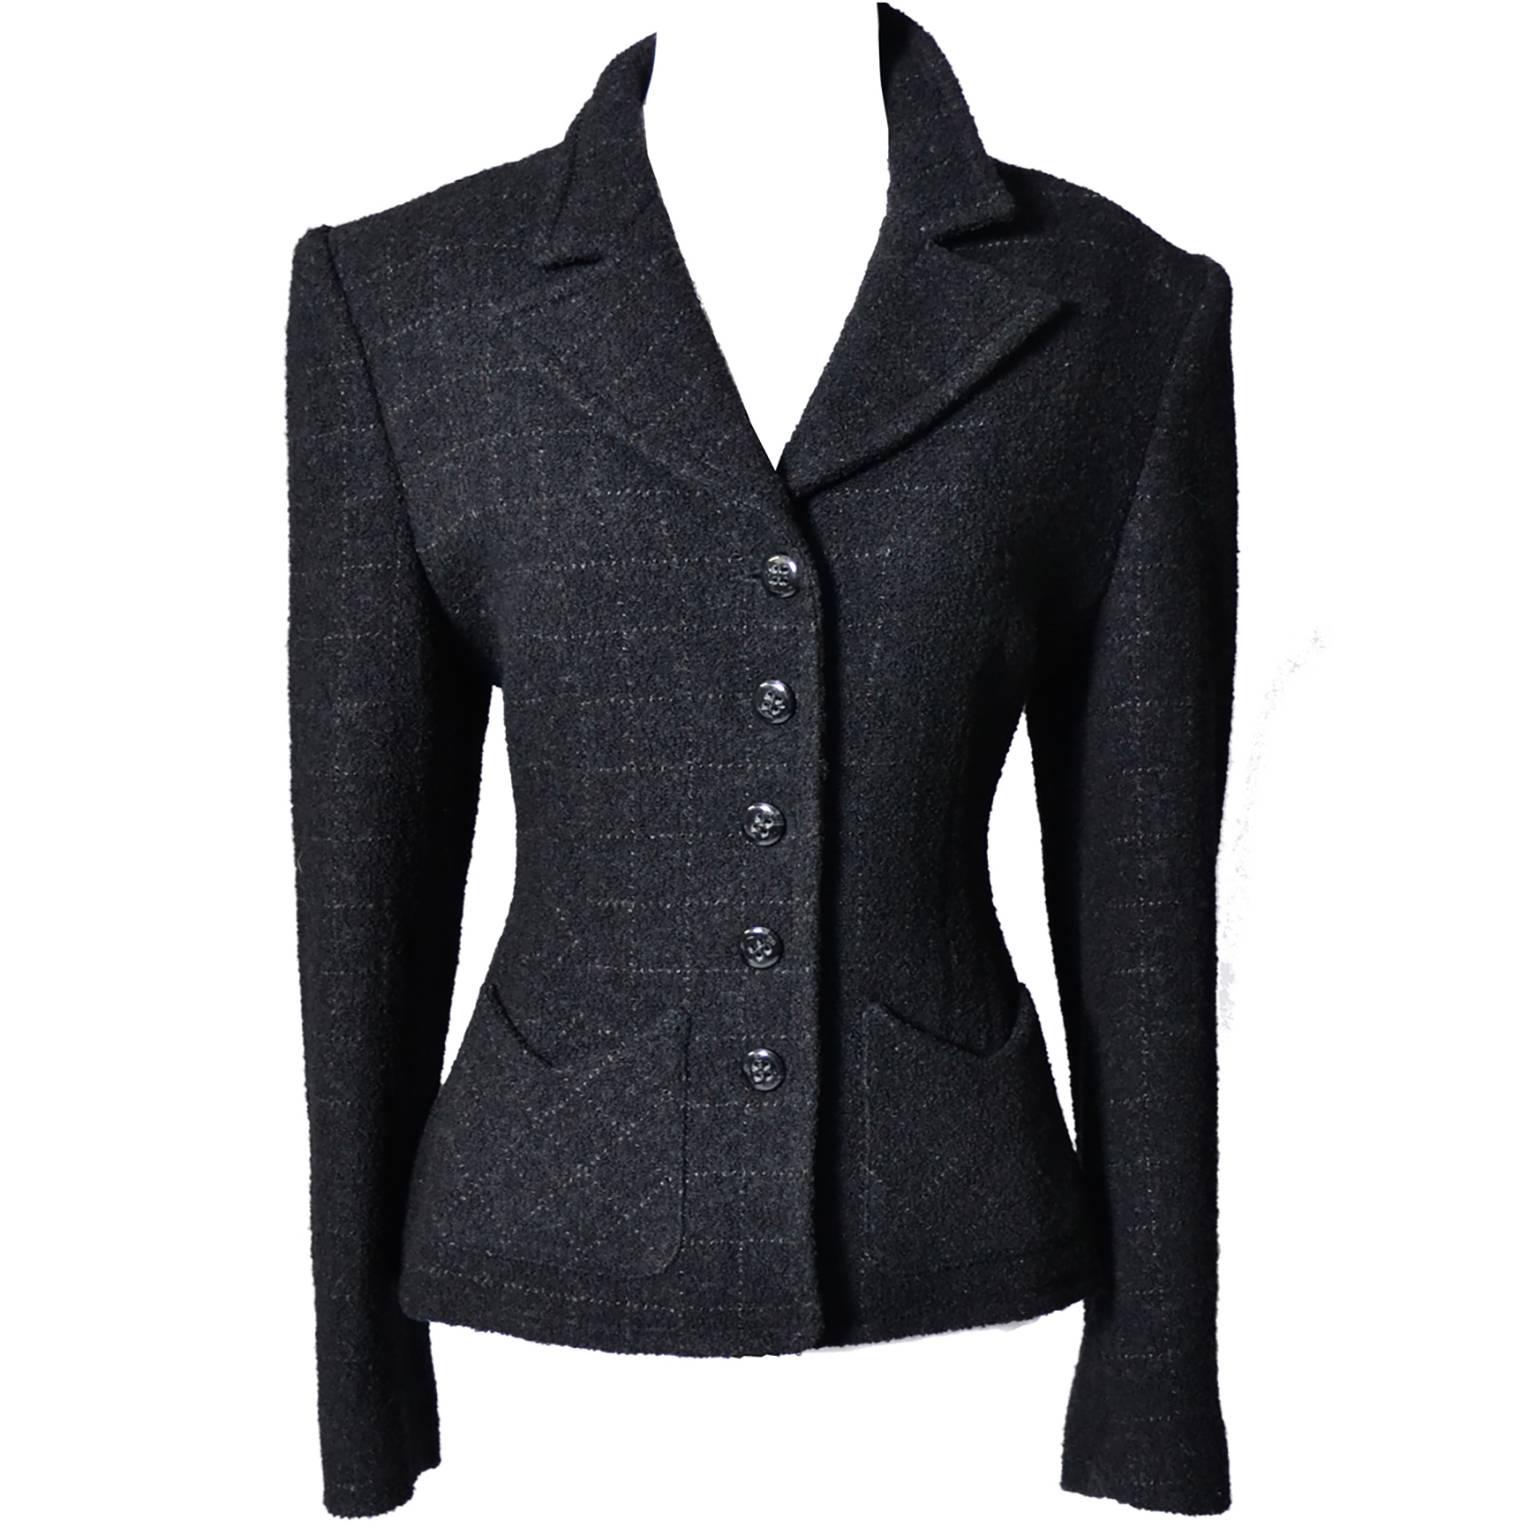 Sonia Rykiel Paris Vintage Wool Blend Windowpane Plaid Blazer Jacket